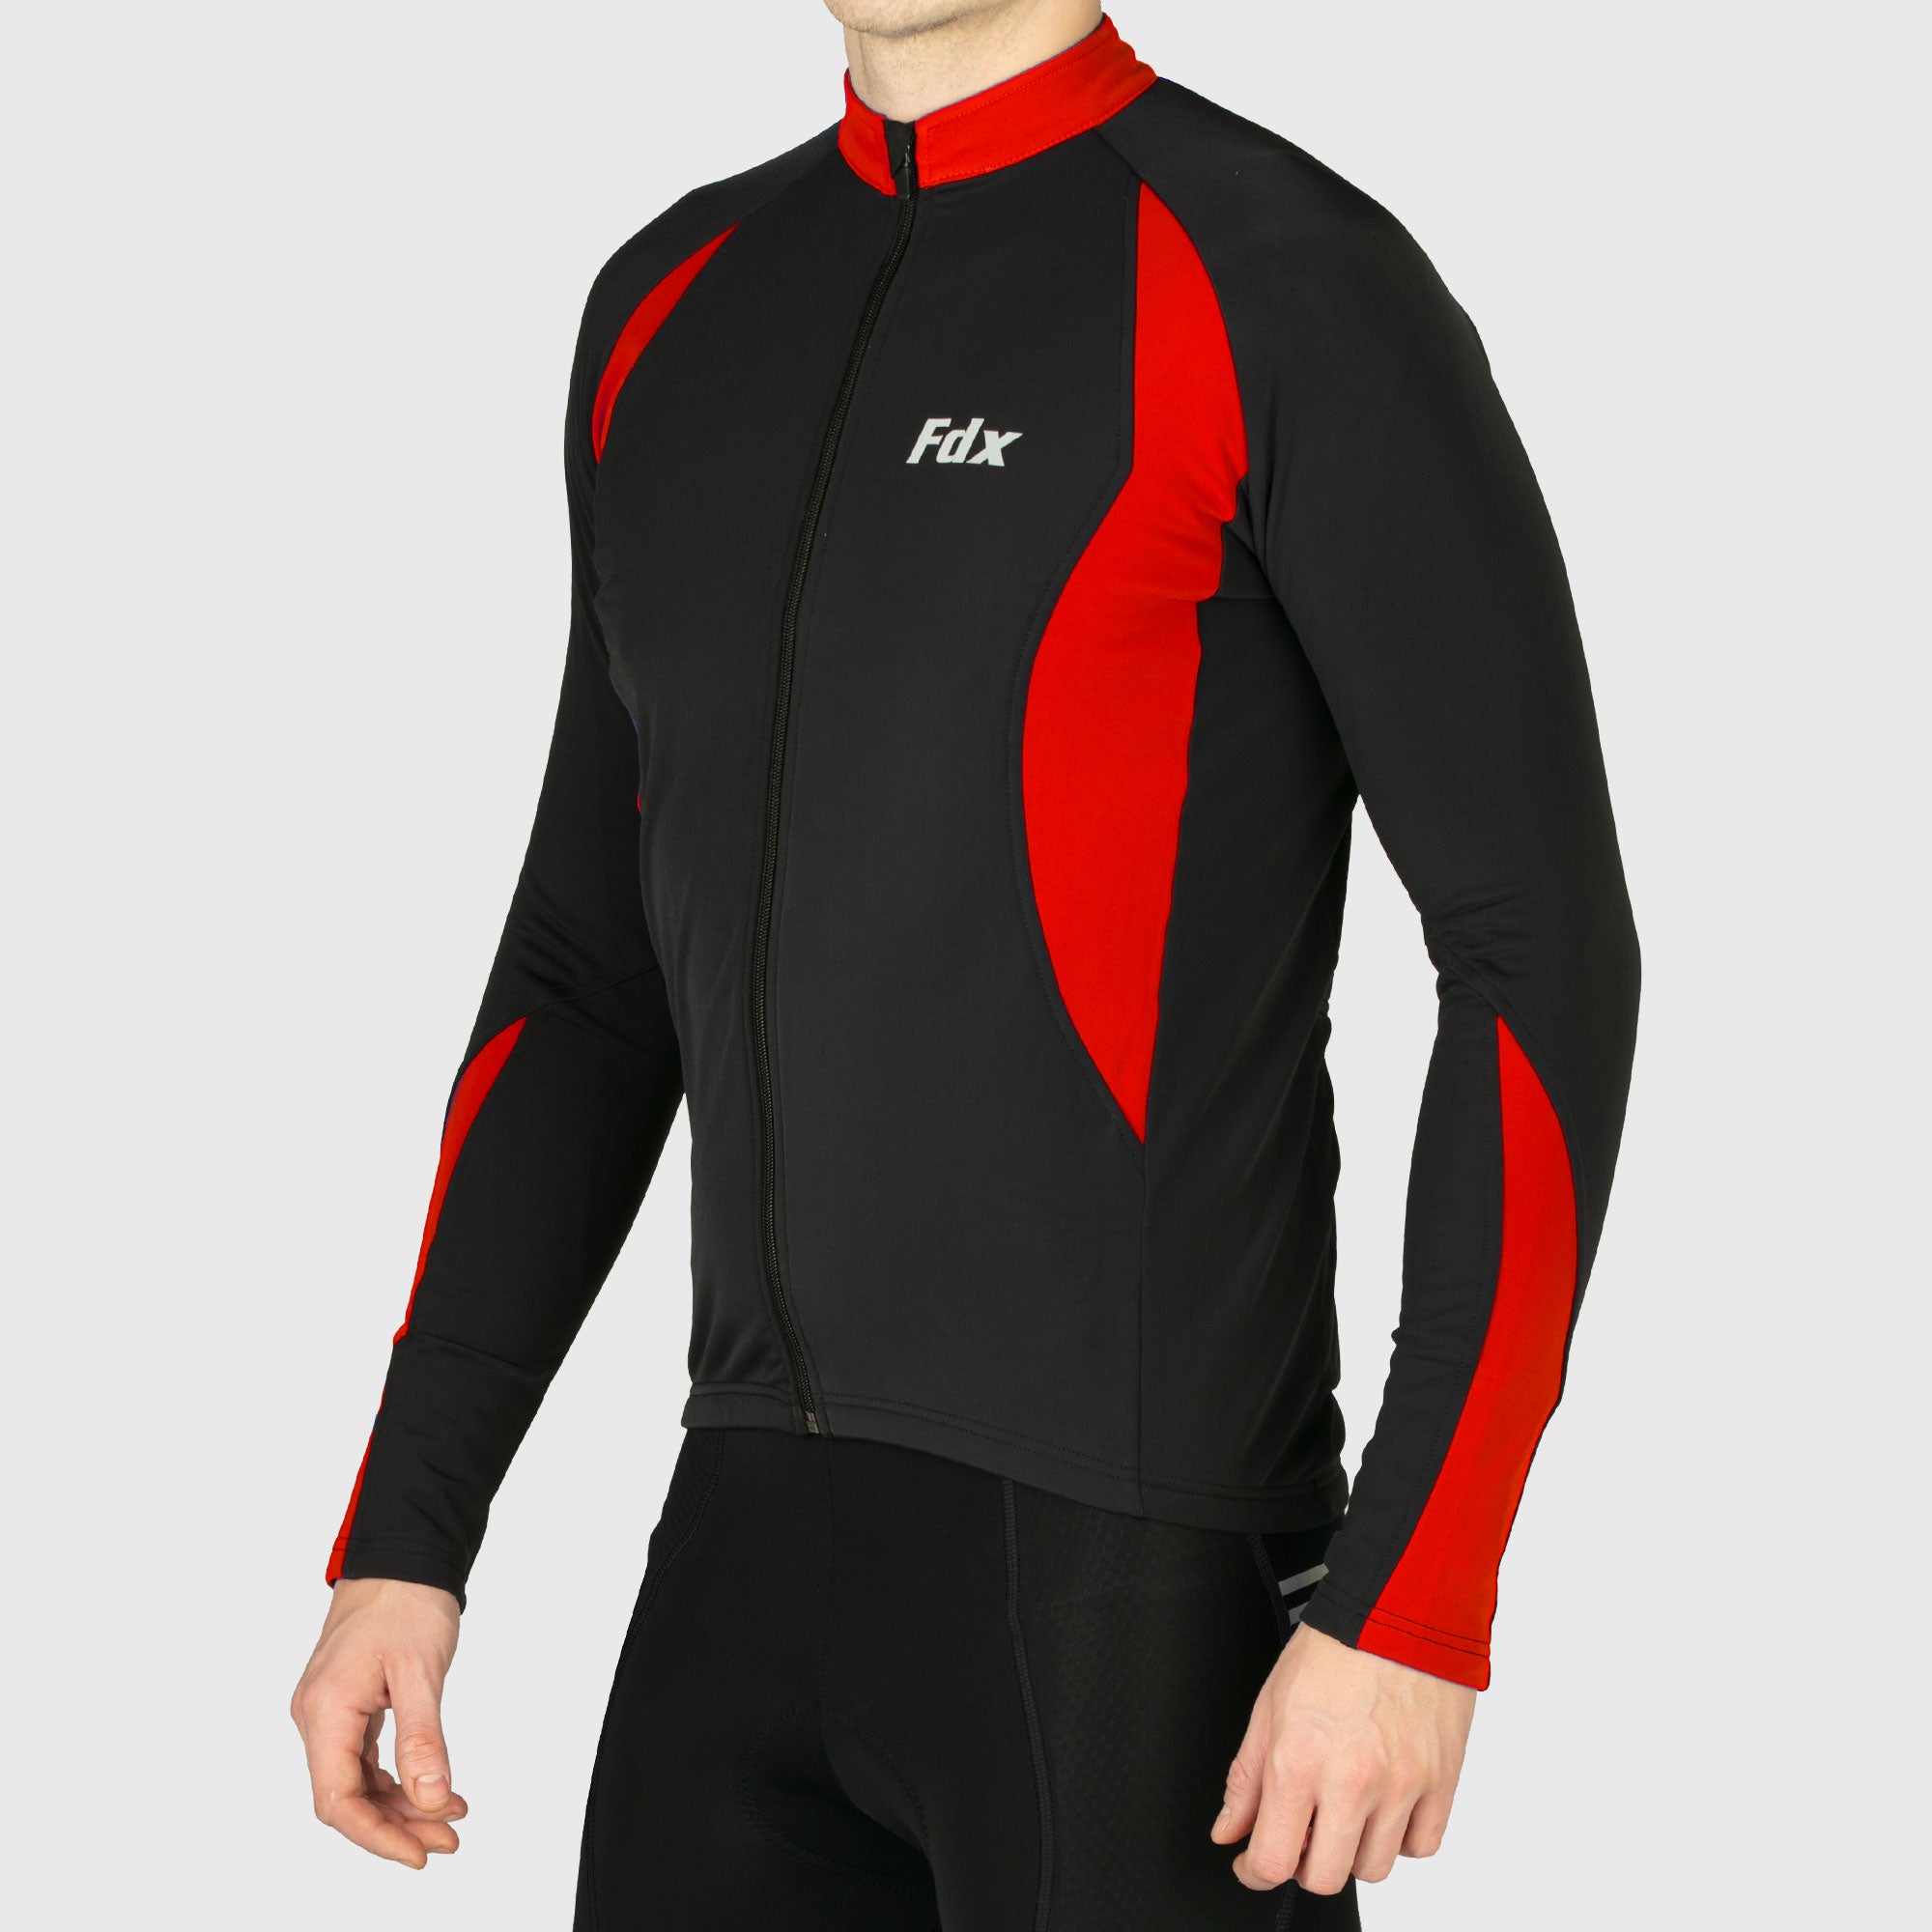 Fdx Mens Black & Red Long Sleeve Cycling Jersey for Winter Roubaix Thermal Fleece Road Bike Wear Top Full Zipper, Pockets & Hi-viz Reflectors - Viper